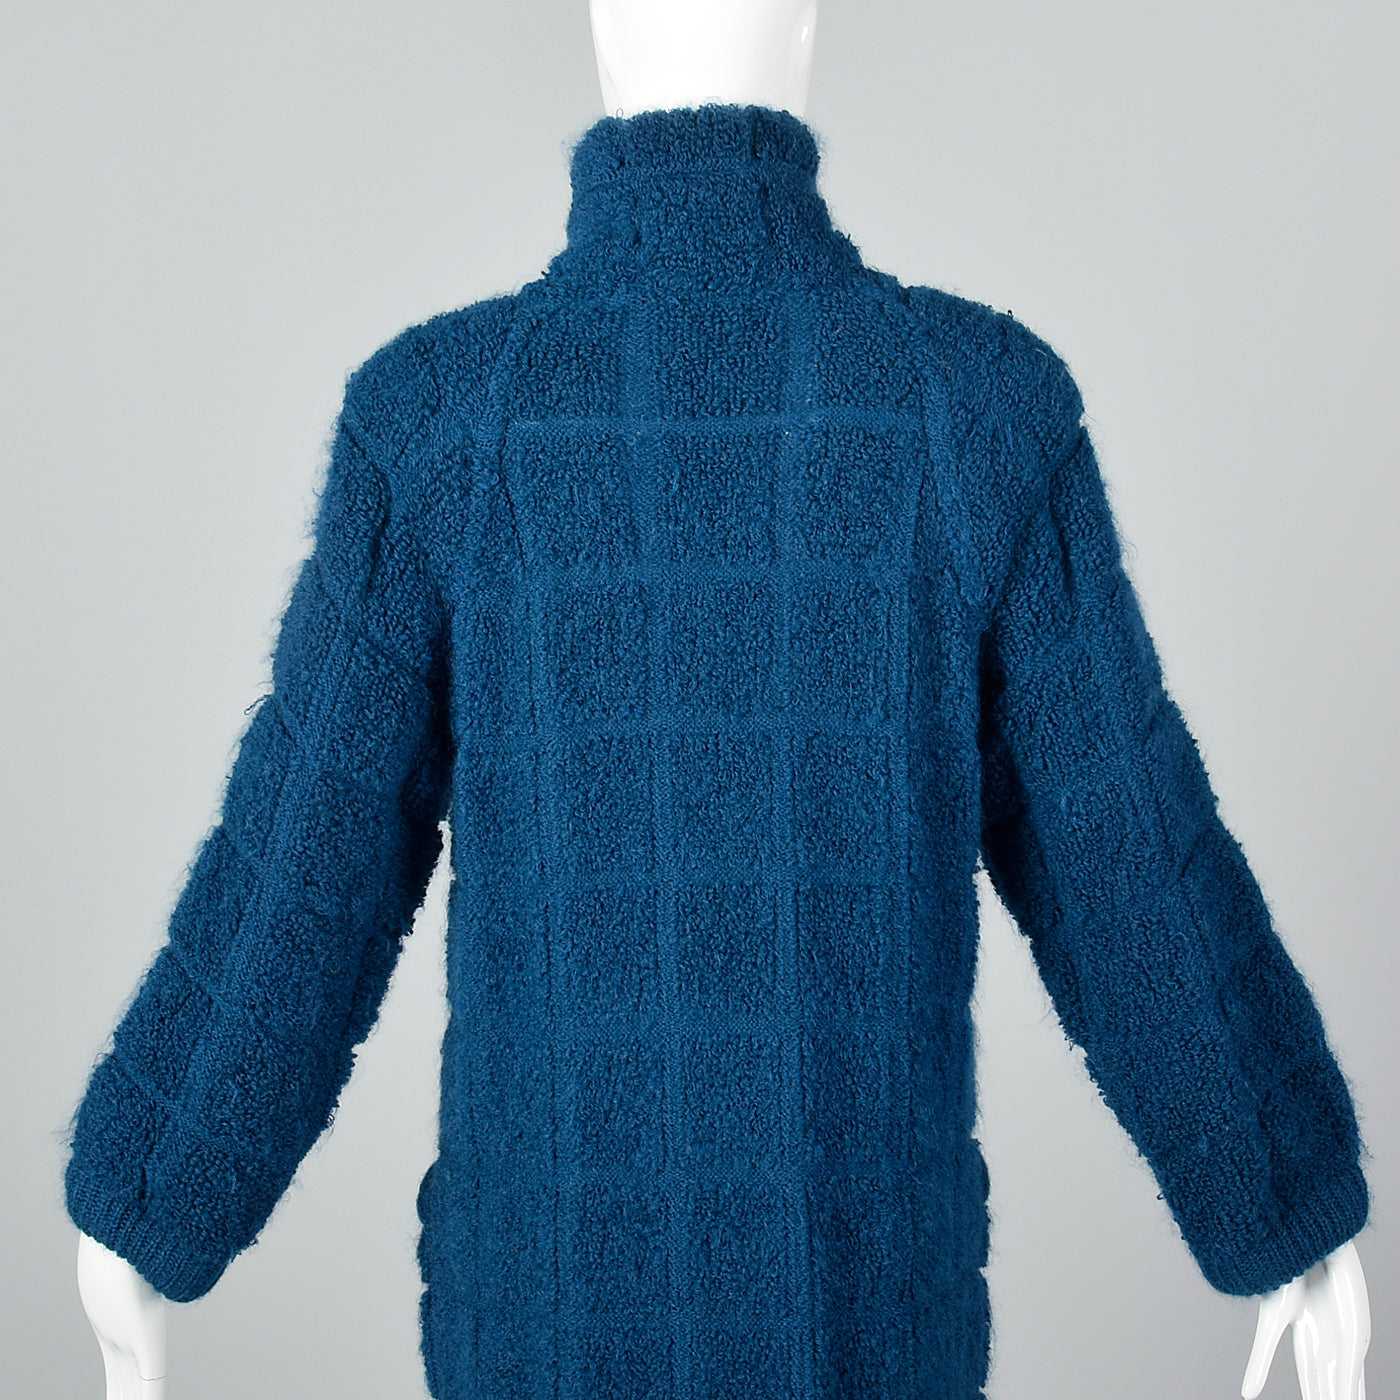 Soft & Cozy Missoni Teal Mohair Cardigan Sweater Coat